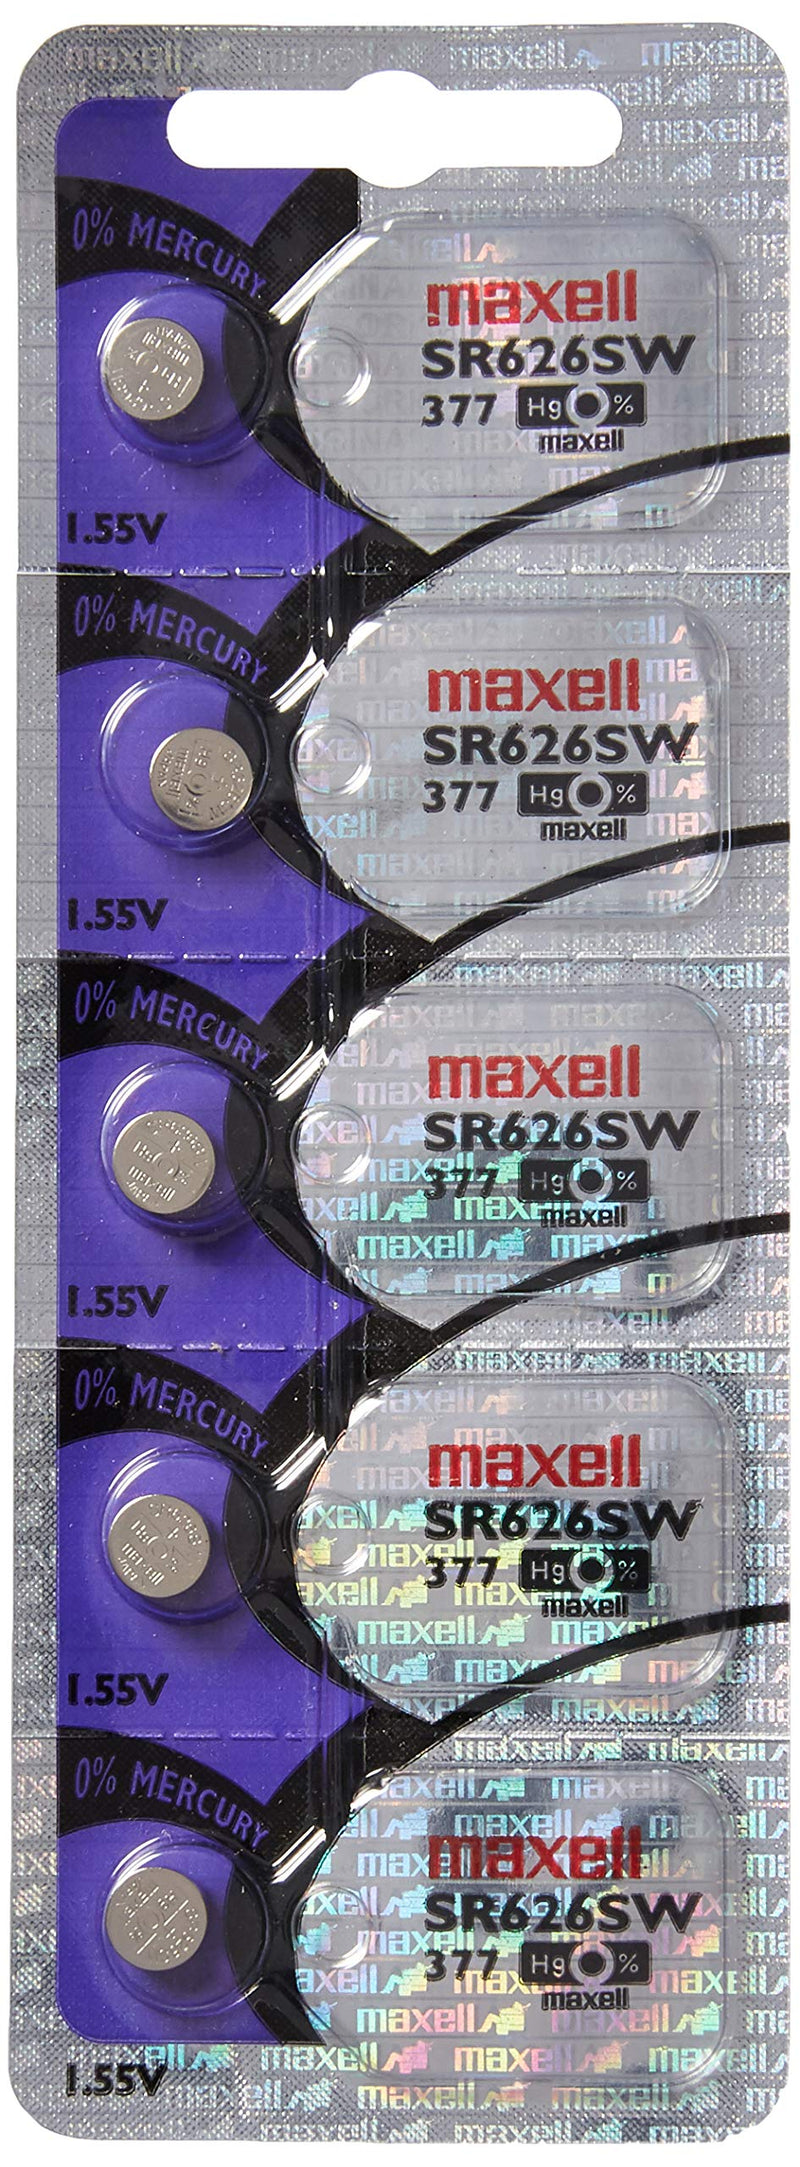 [Australia] - 5 Maxell SR626SW 377 Silver Oxide Watch Batteries 1 Pack 